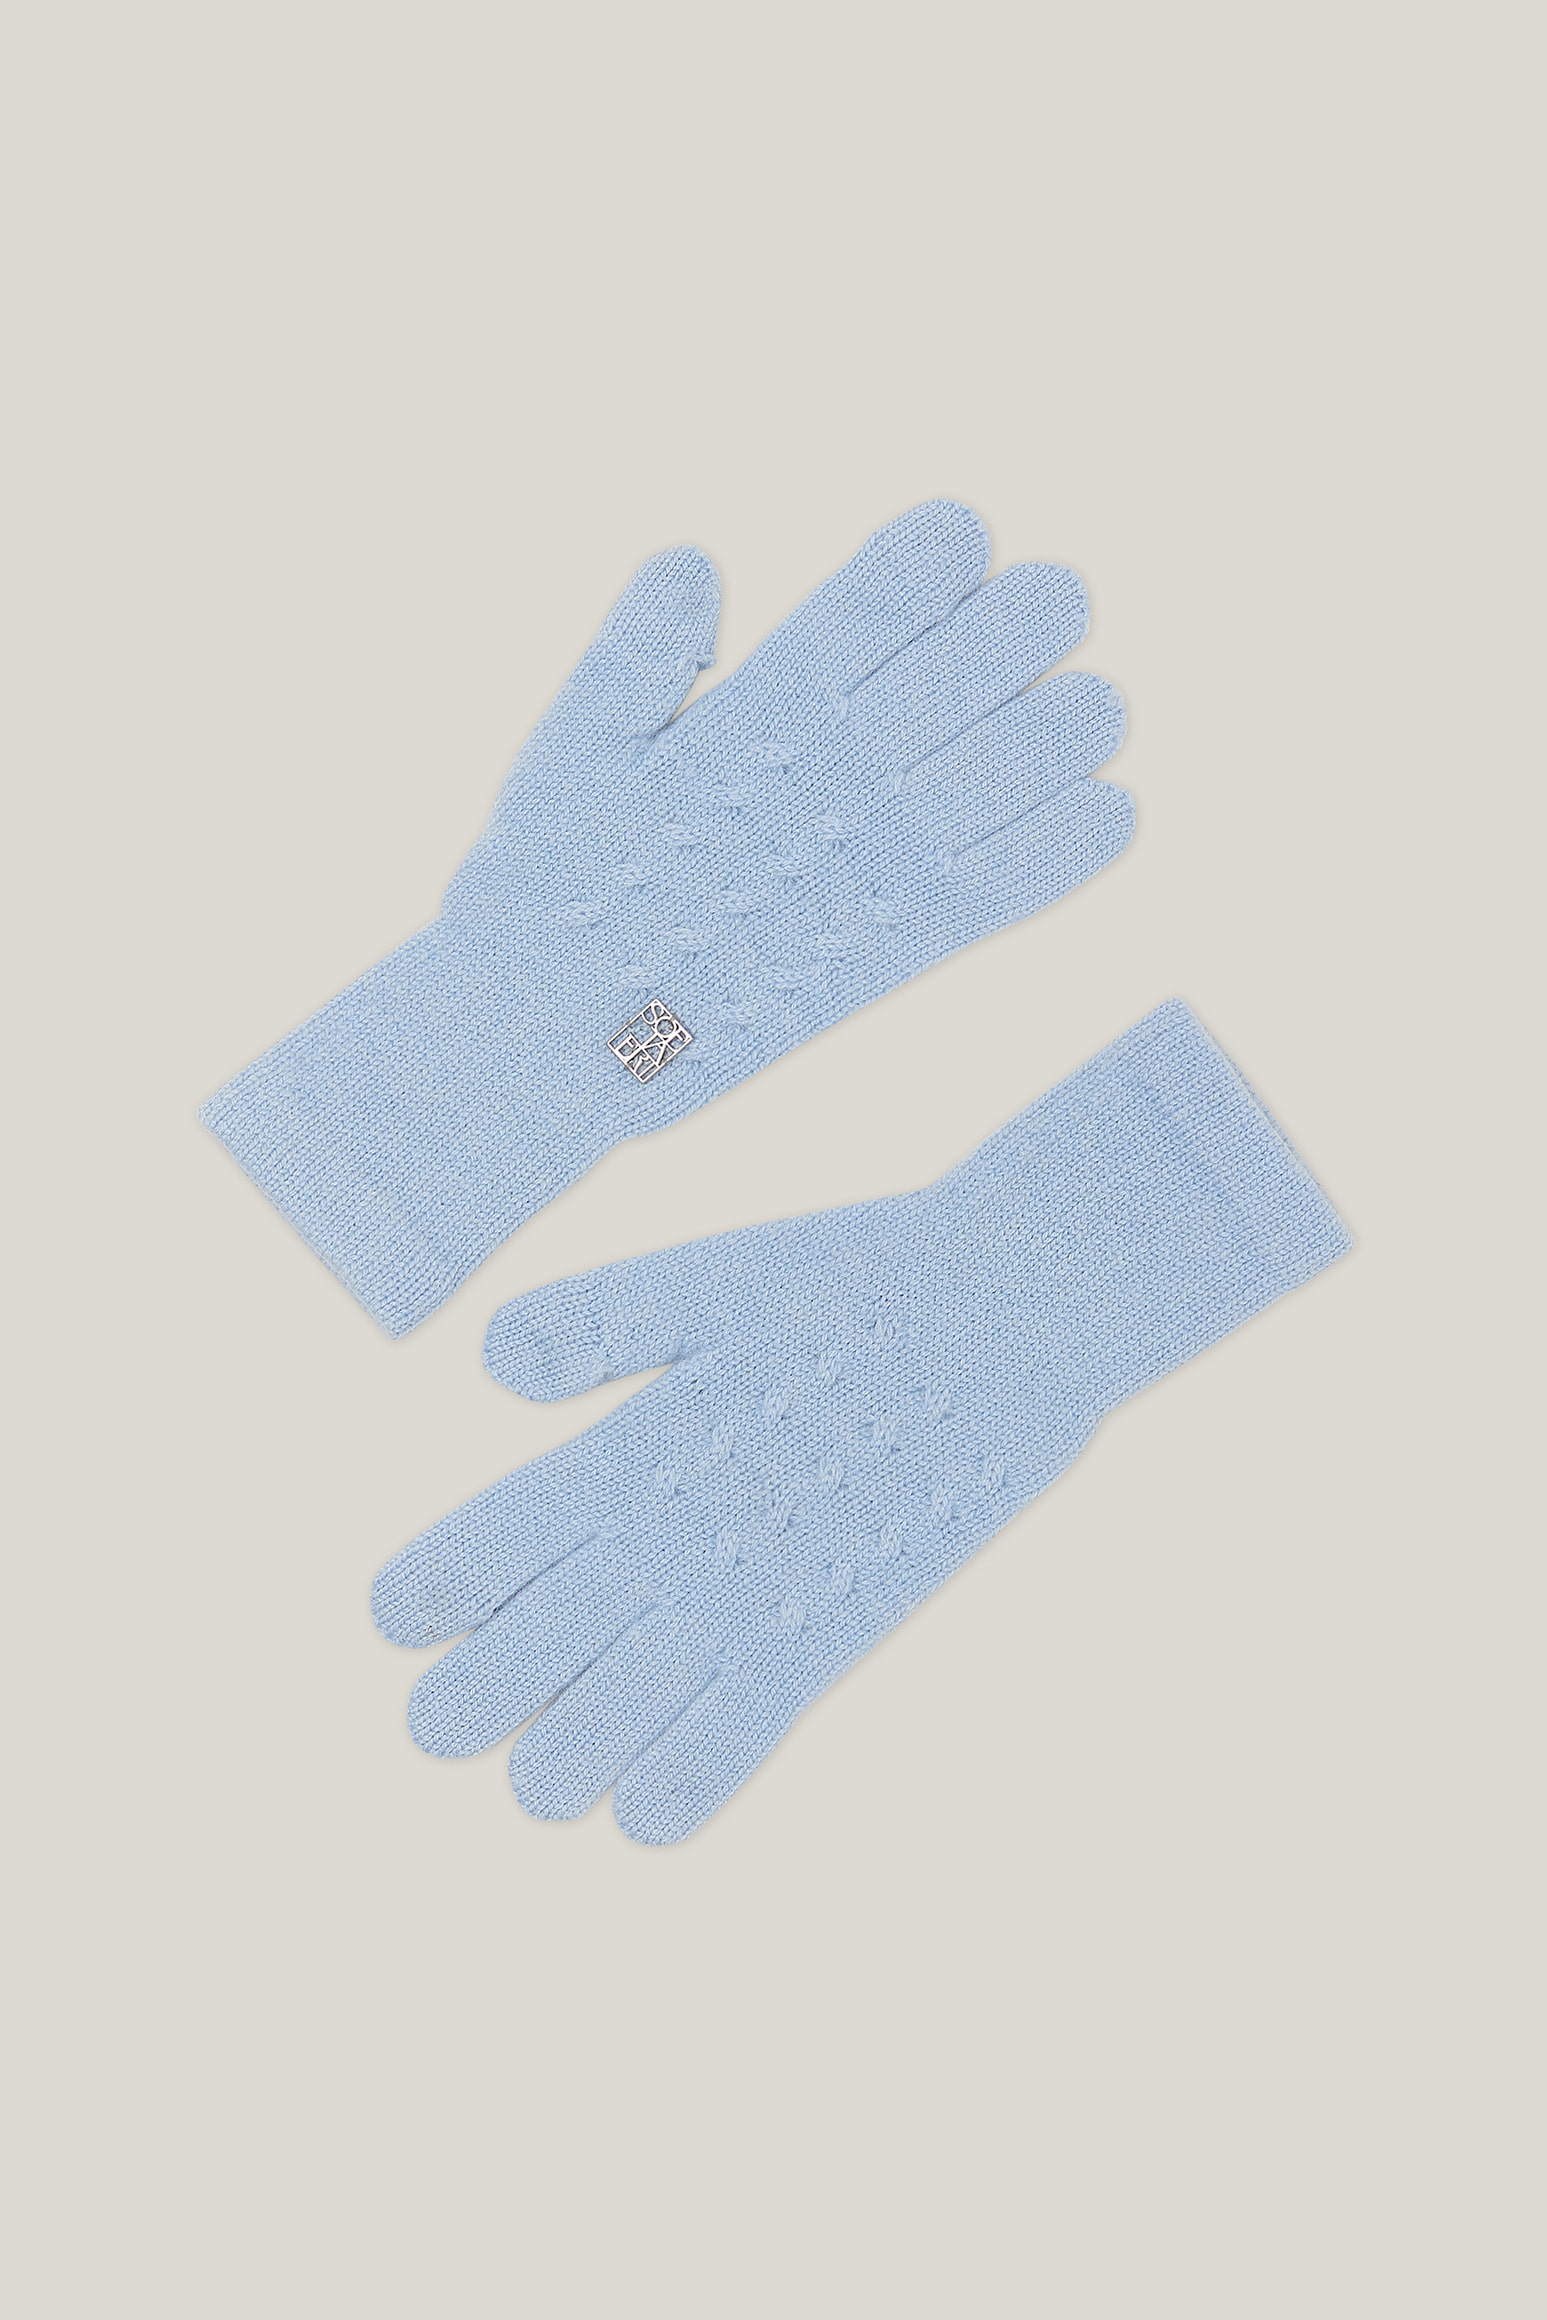 Finger Hole Knit Gloves For Womens (Sky Blue)